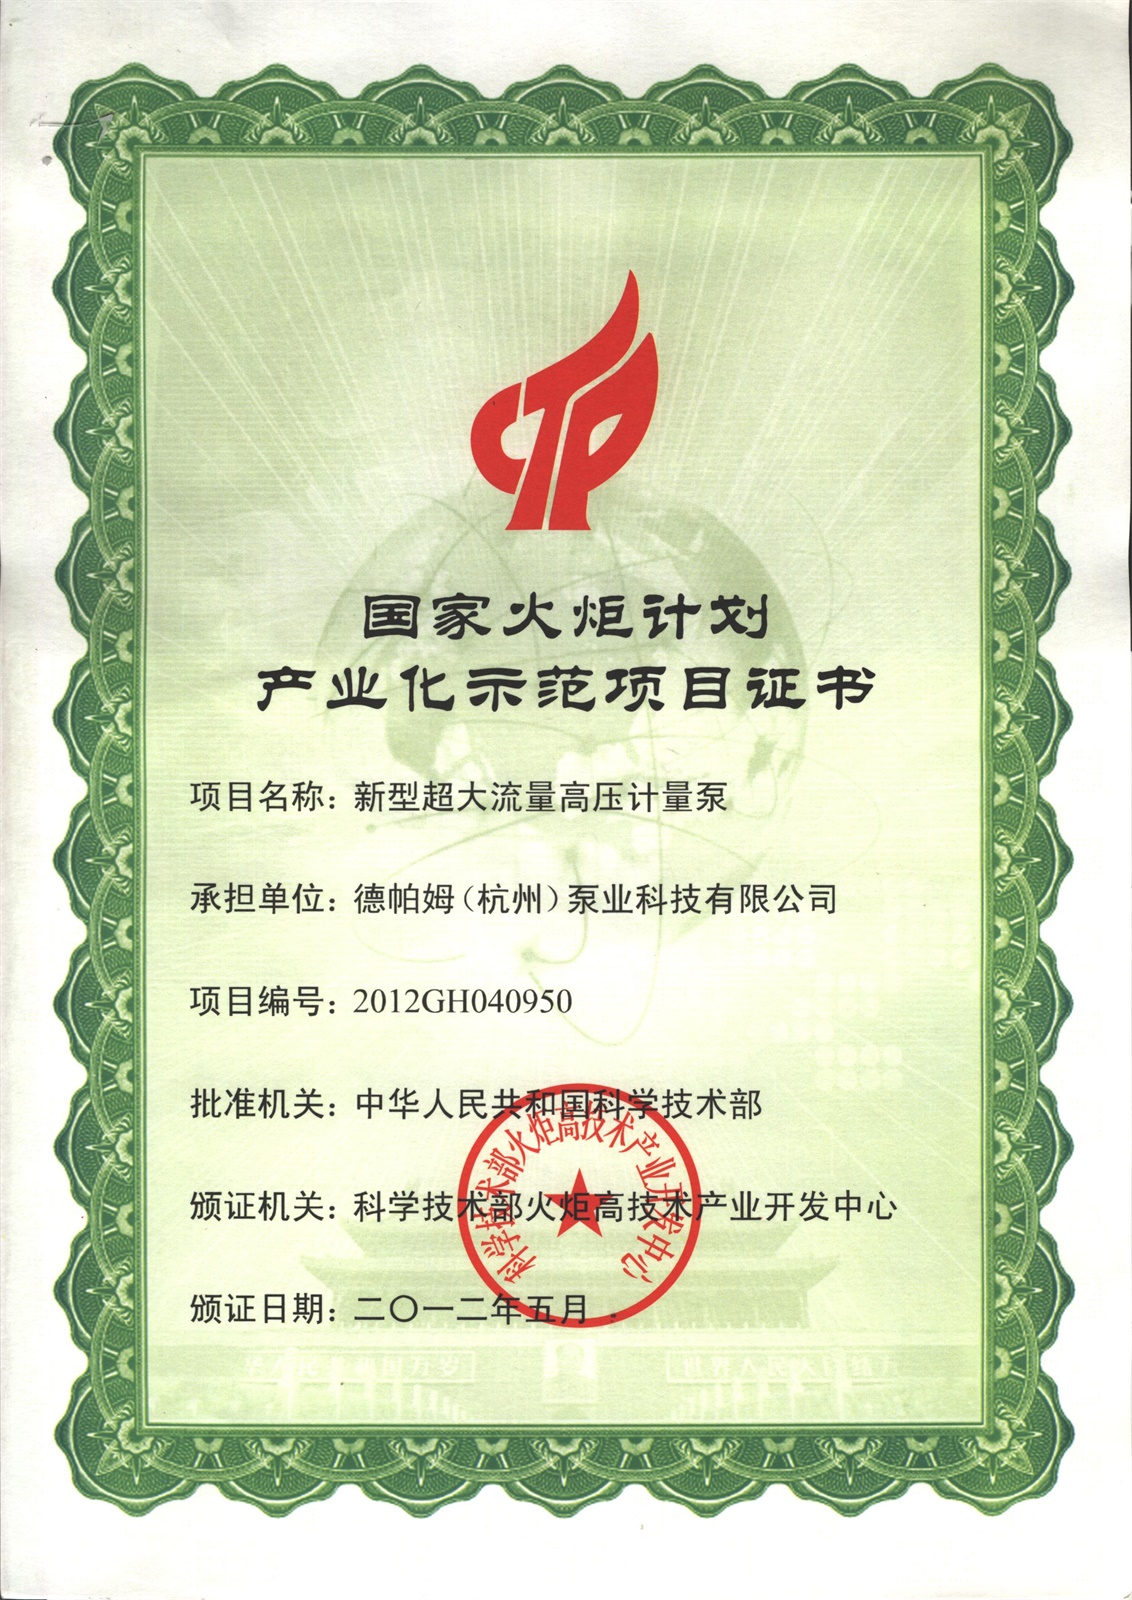 New super-flow torch certificate